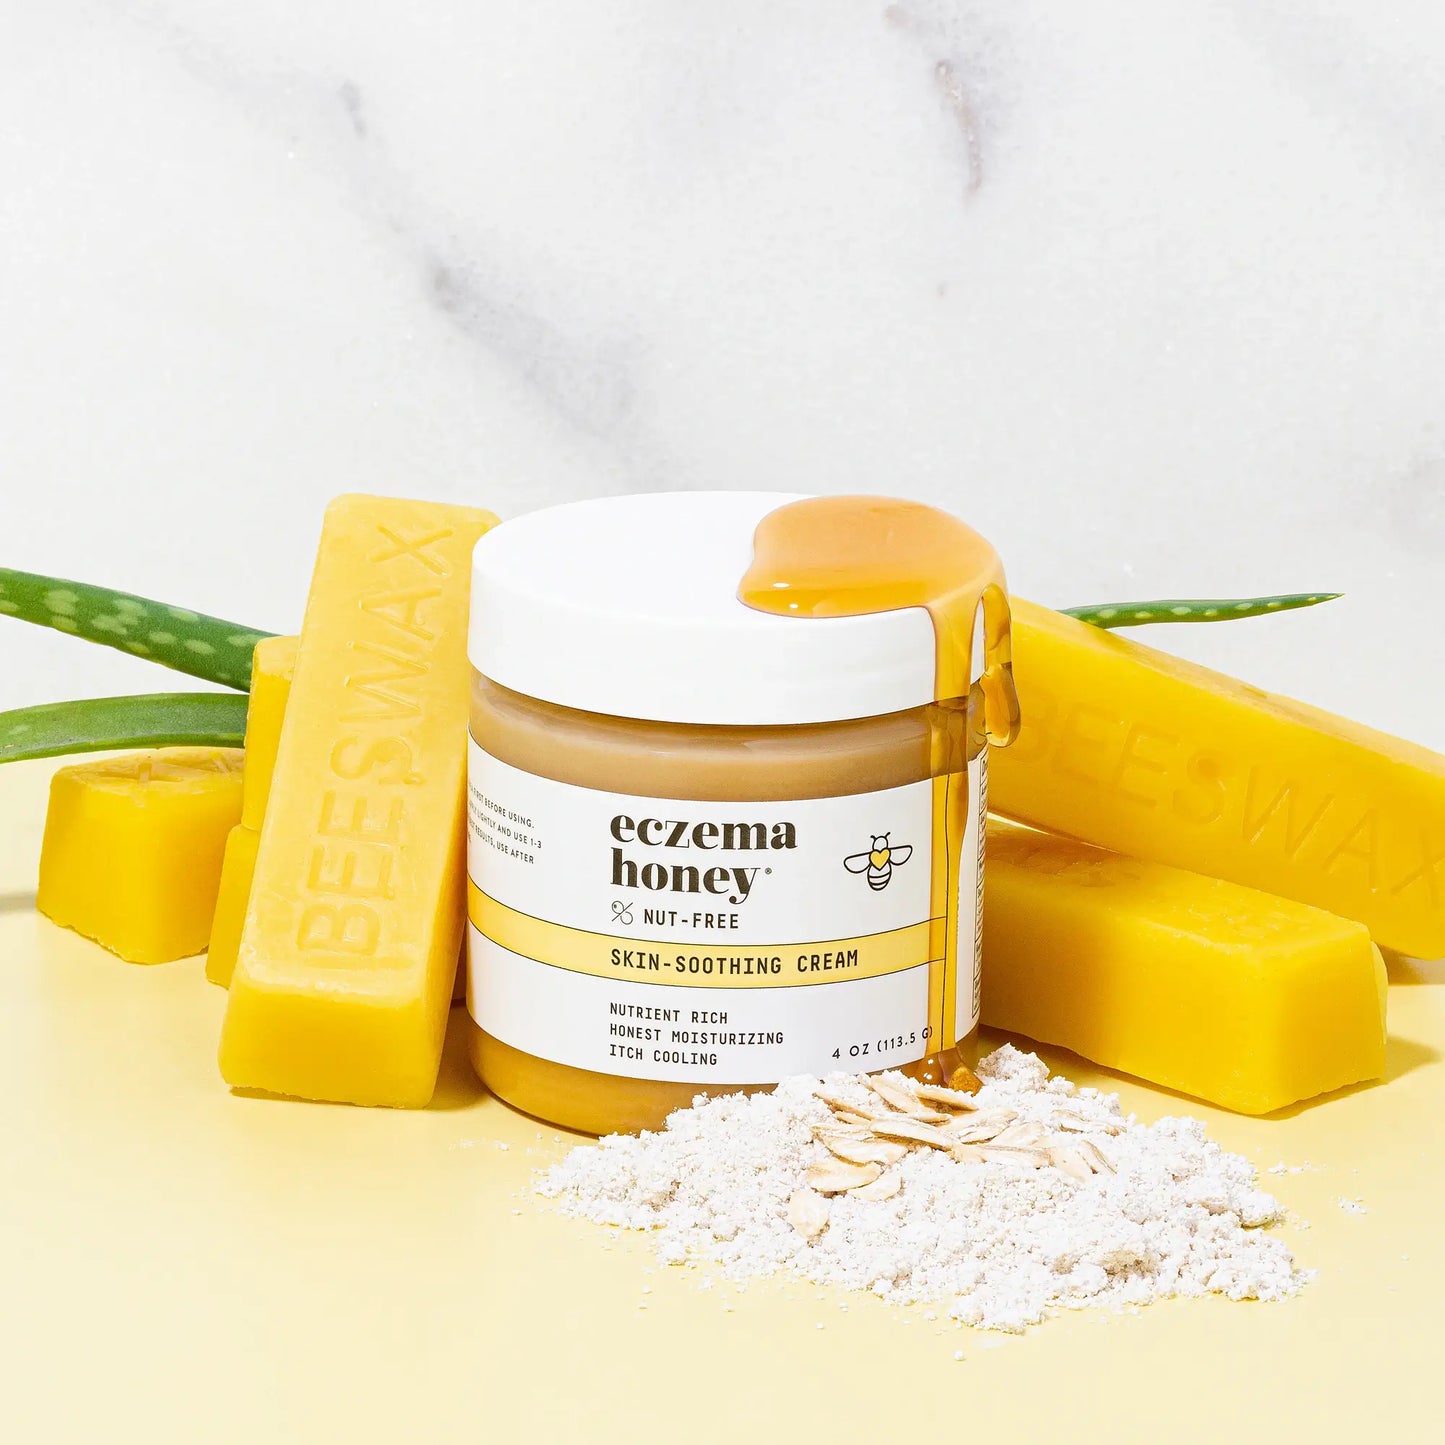 Eczema Honey Nut-Free Skin-Soothing Cream